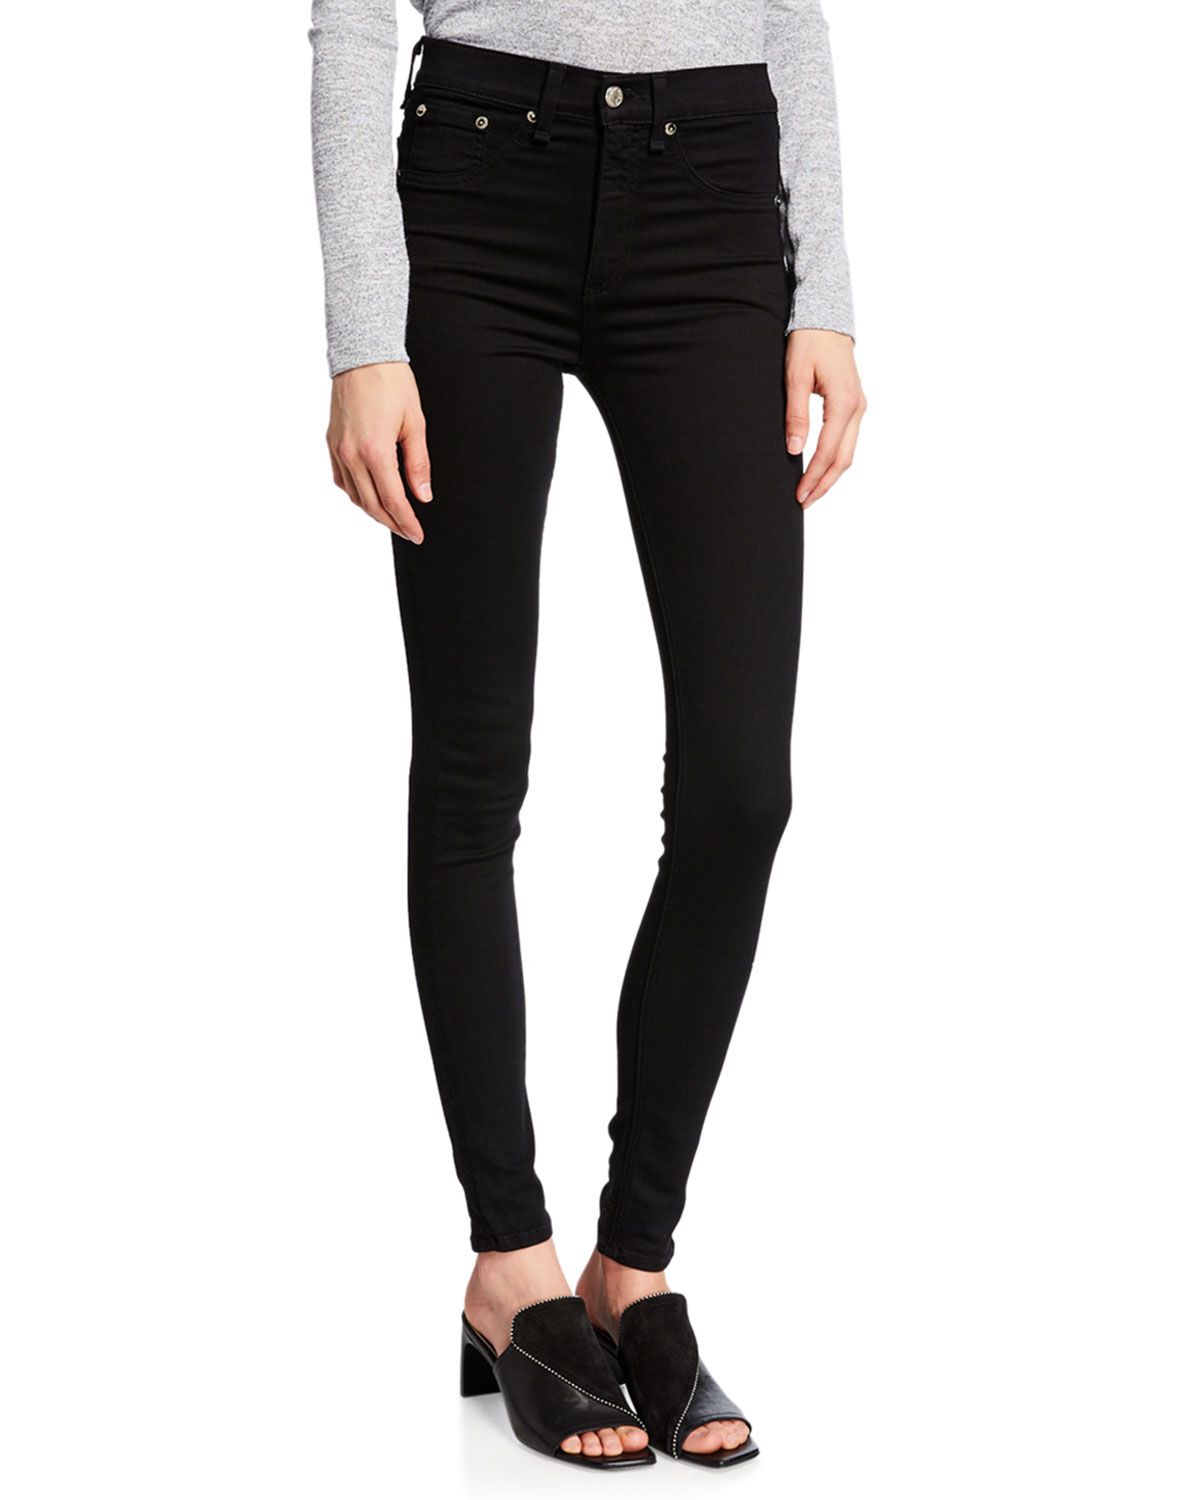 10 Inch Skinny Jeans, Black | Neiman Marcus